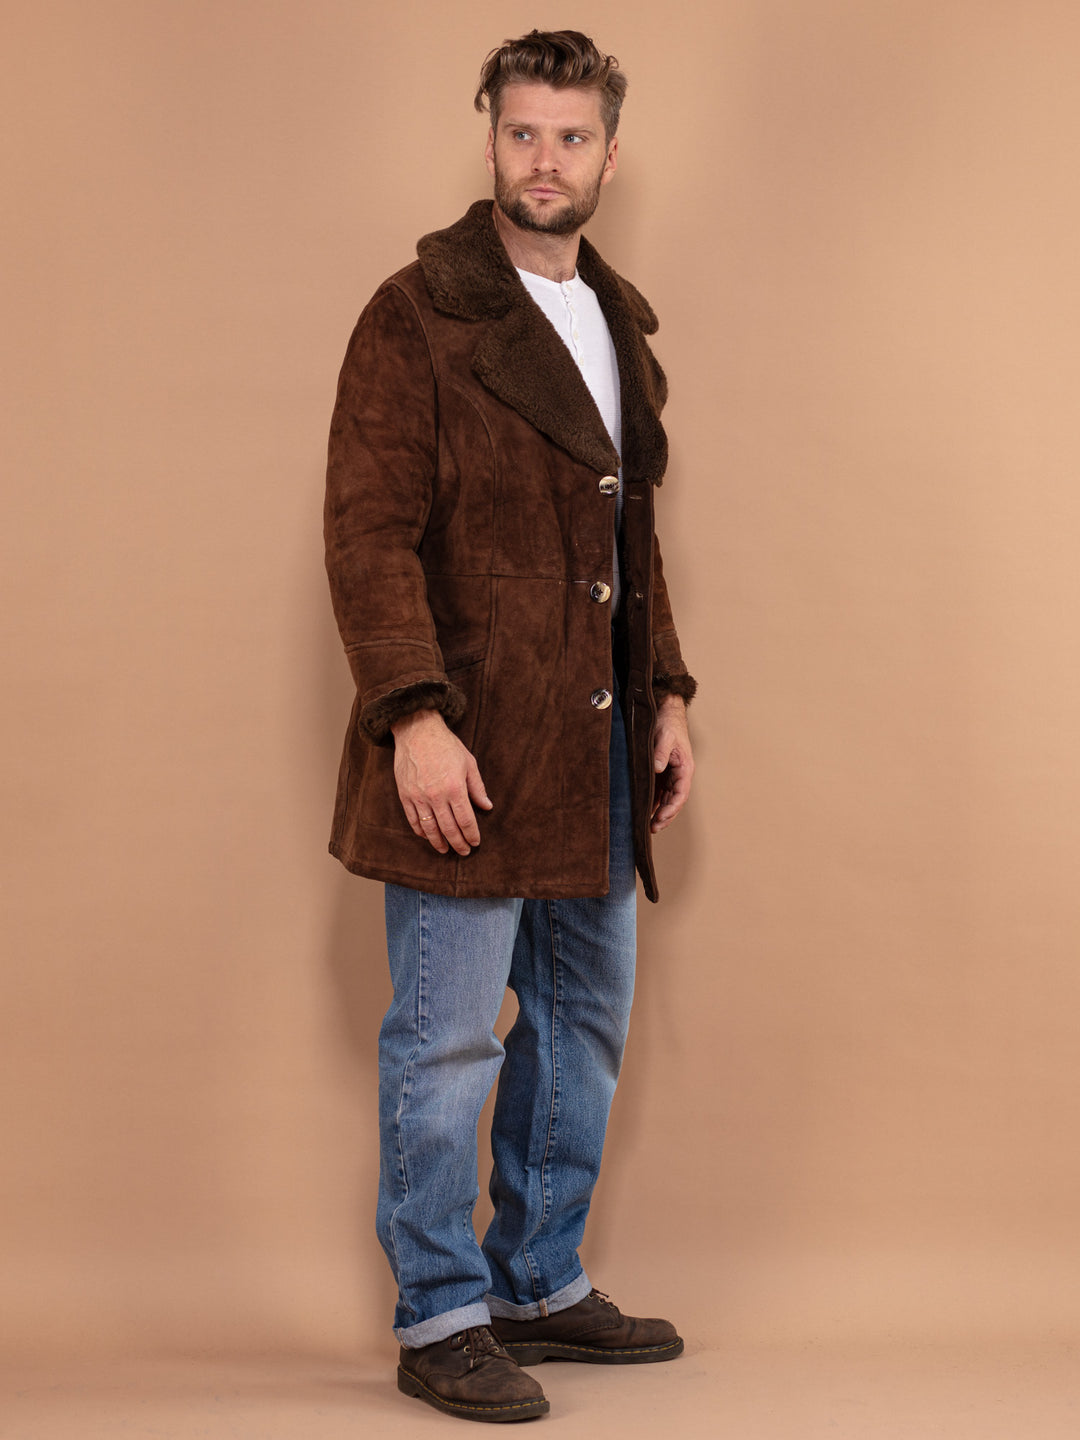 Men Sheepskin Coat, Size Medium M, Shearling Coat Men, 70s Vintage Coat, Winter Clothing, Brown Suede Coat, Vintage Overcoat, Trapper Coat